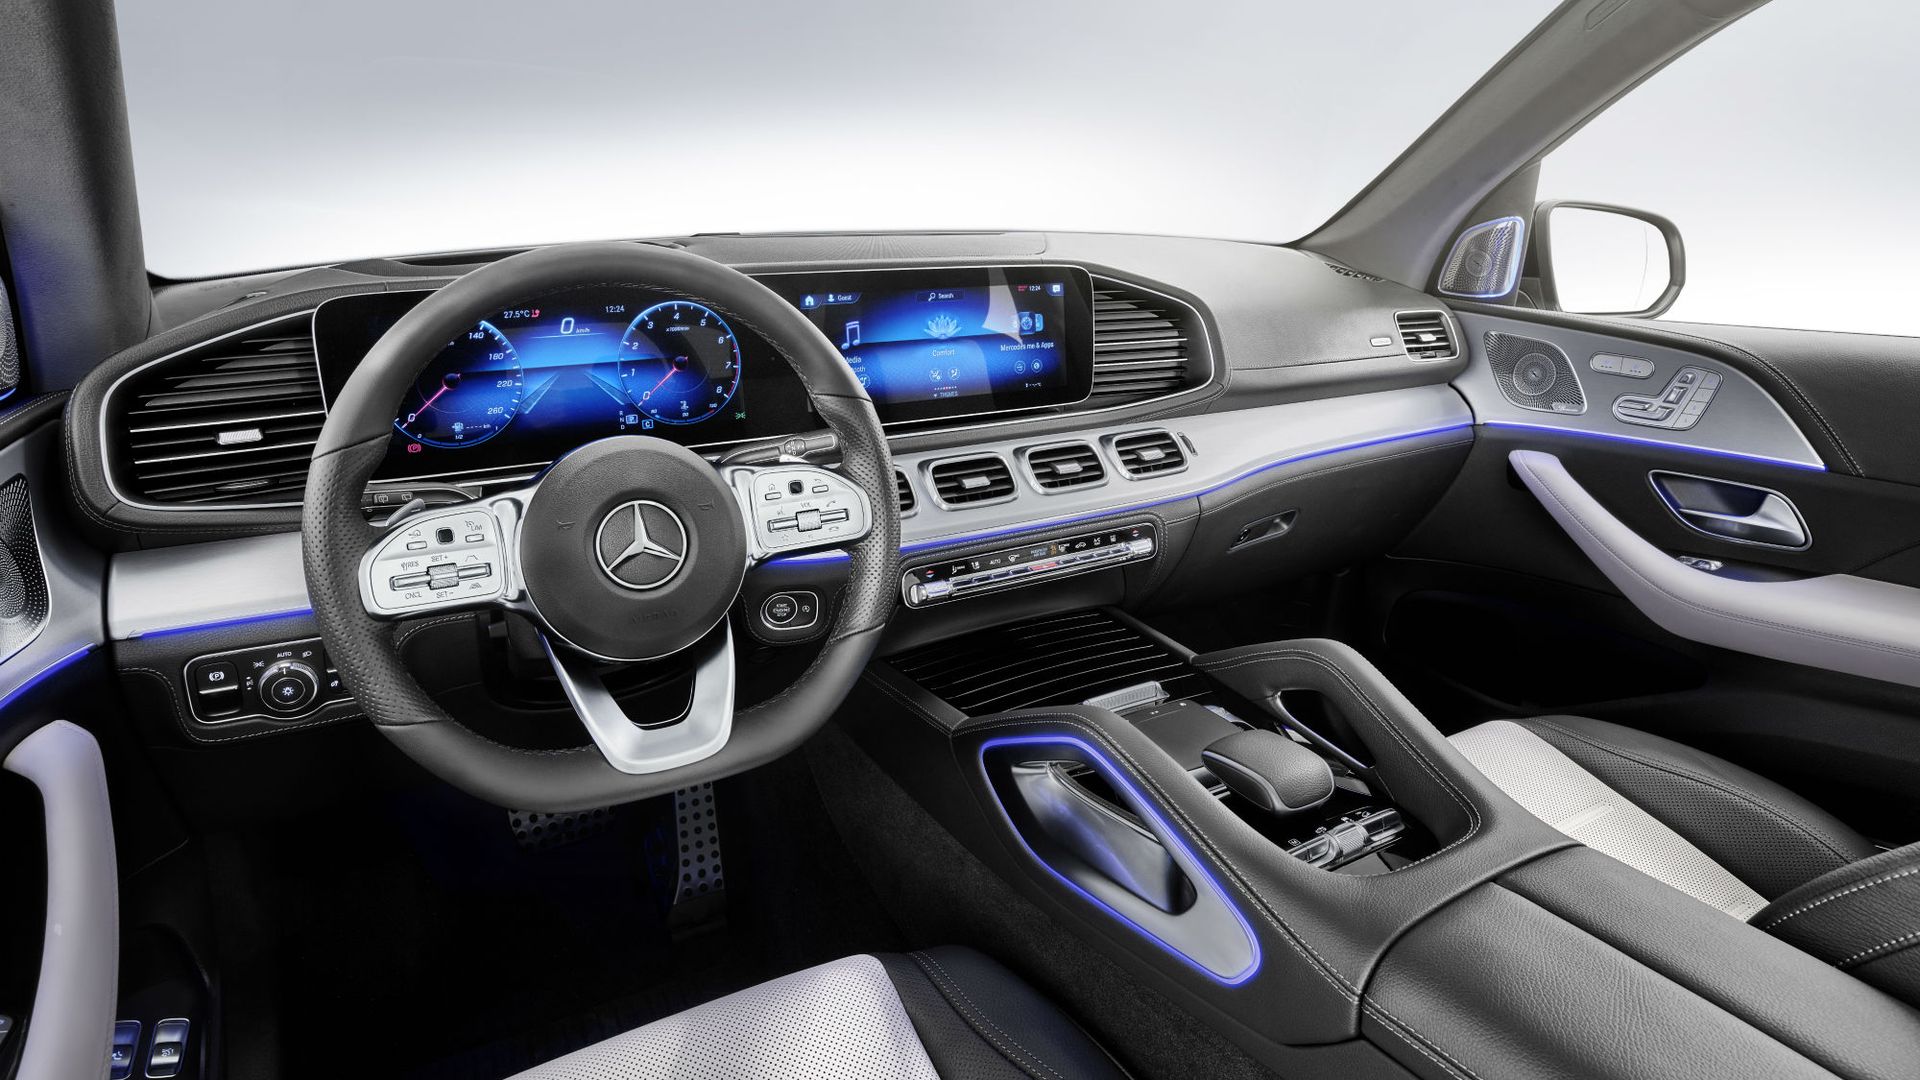 Image of interior of Mercedes GLE 450 SUV